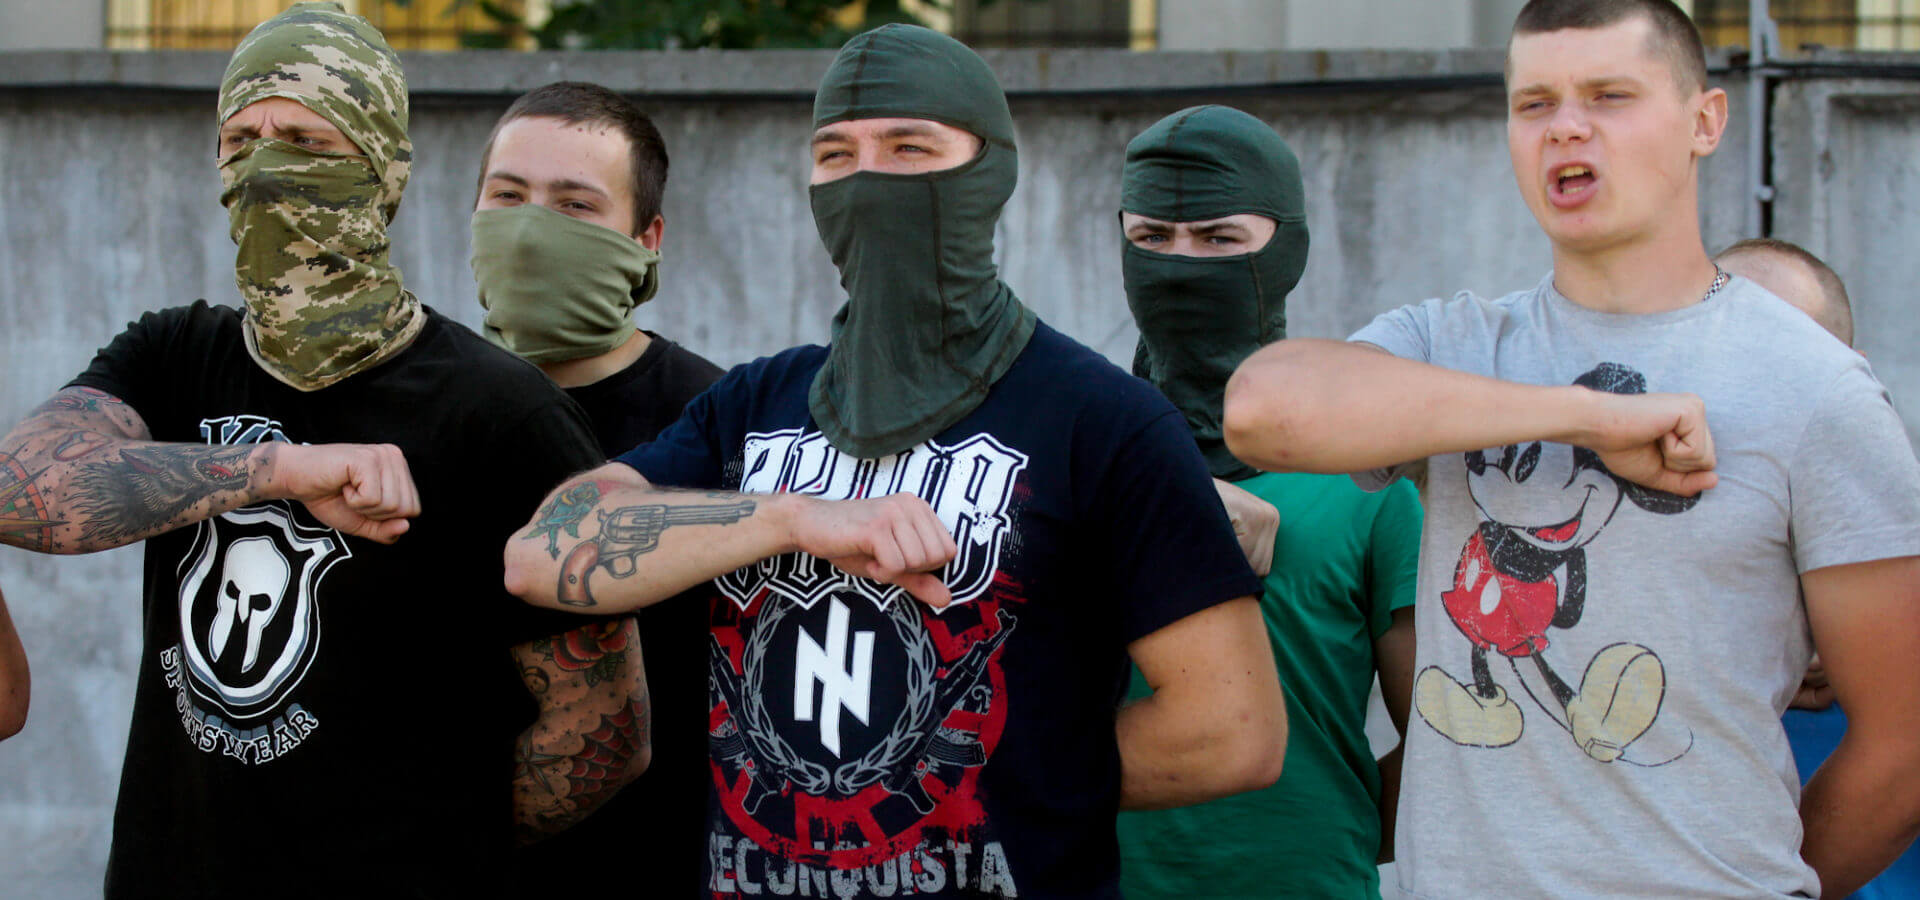 fascism crime Nazi military politics violence paramilitary alt-right Ukraine white supremacy hate racism xenophobia